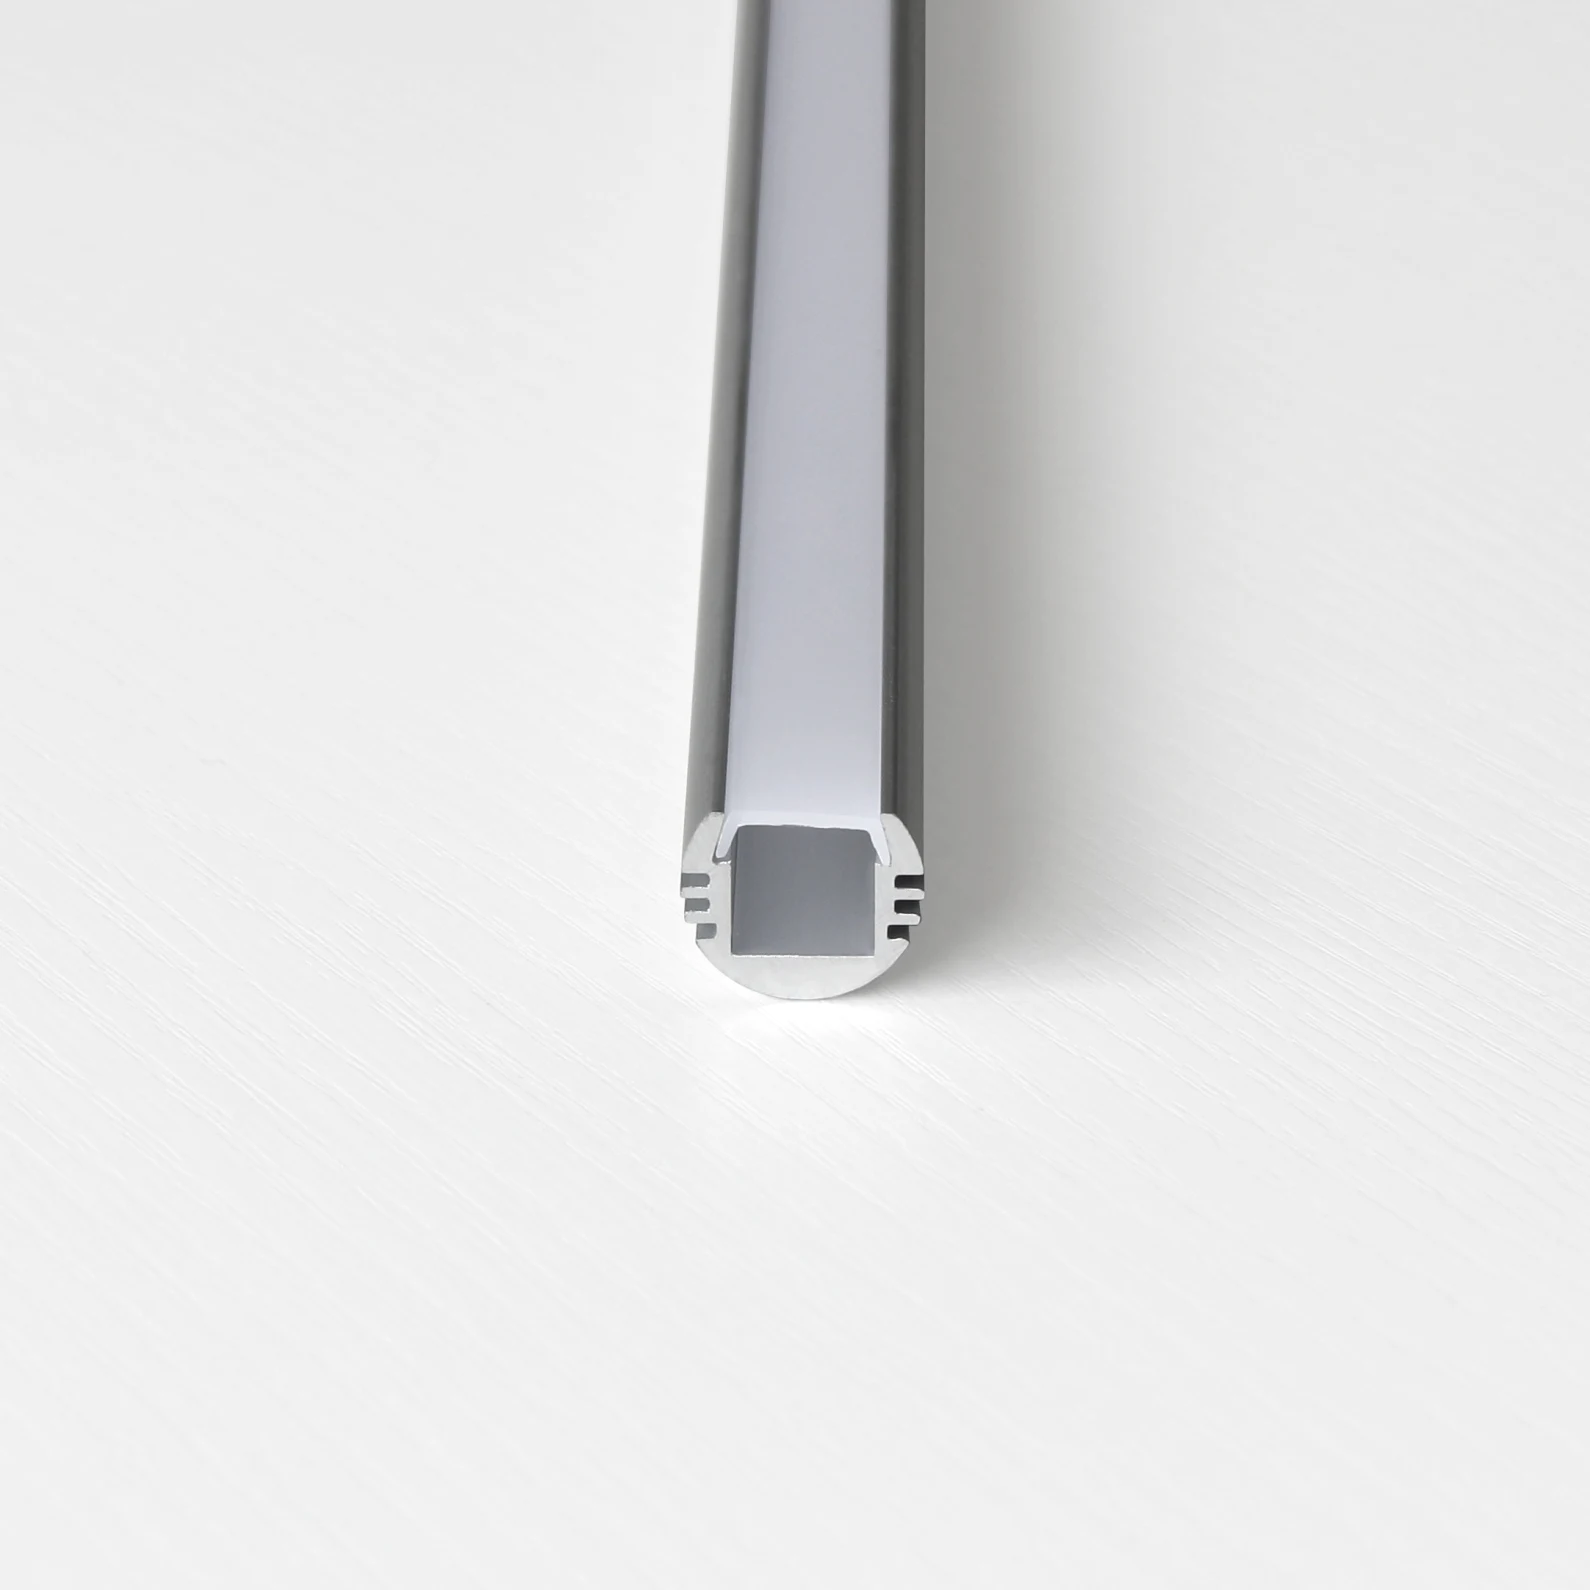 Diameter 15mm Light Pendant Aluminium Extrusion Aluminum LED Profile Round LED Profile for LED Tube